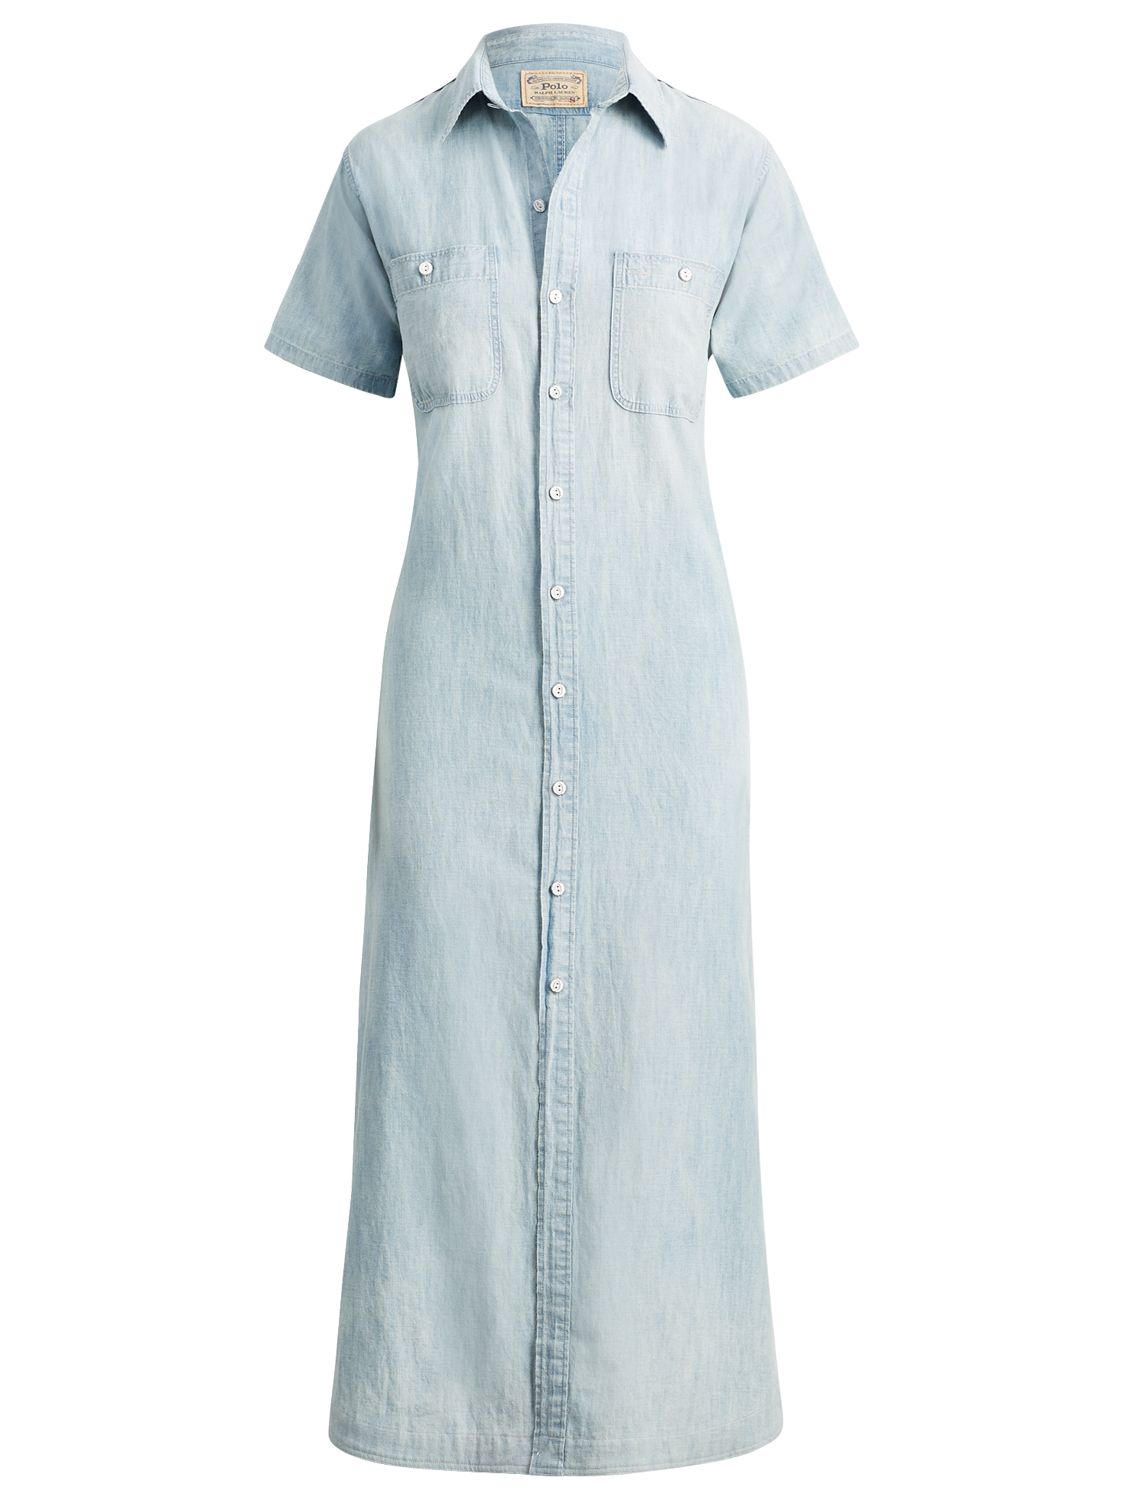 Polo Ralph Lauren Denim Maxi Dress, Light Indigo at John Lewis & Partners